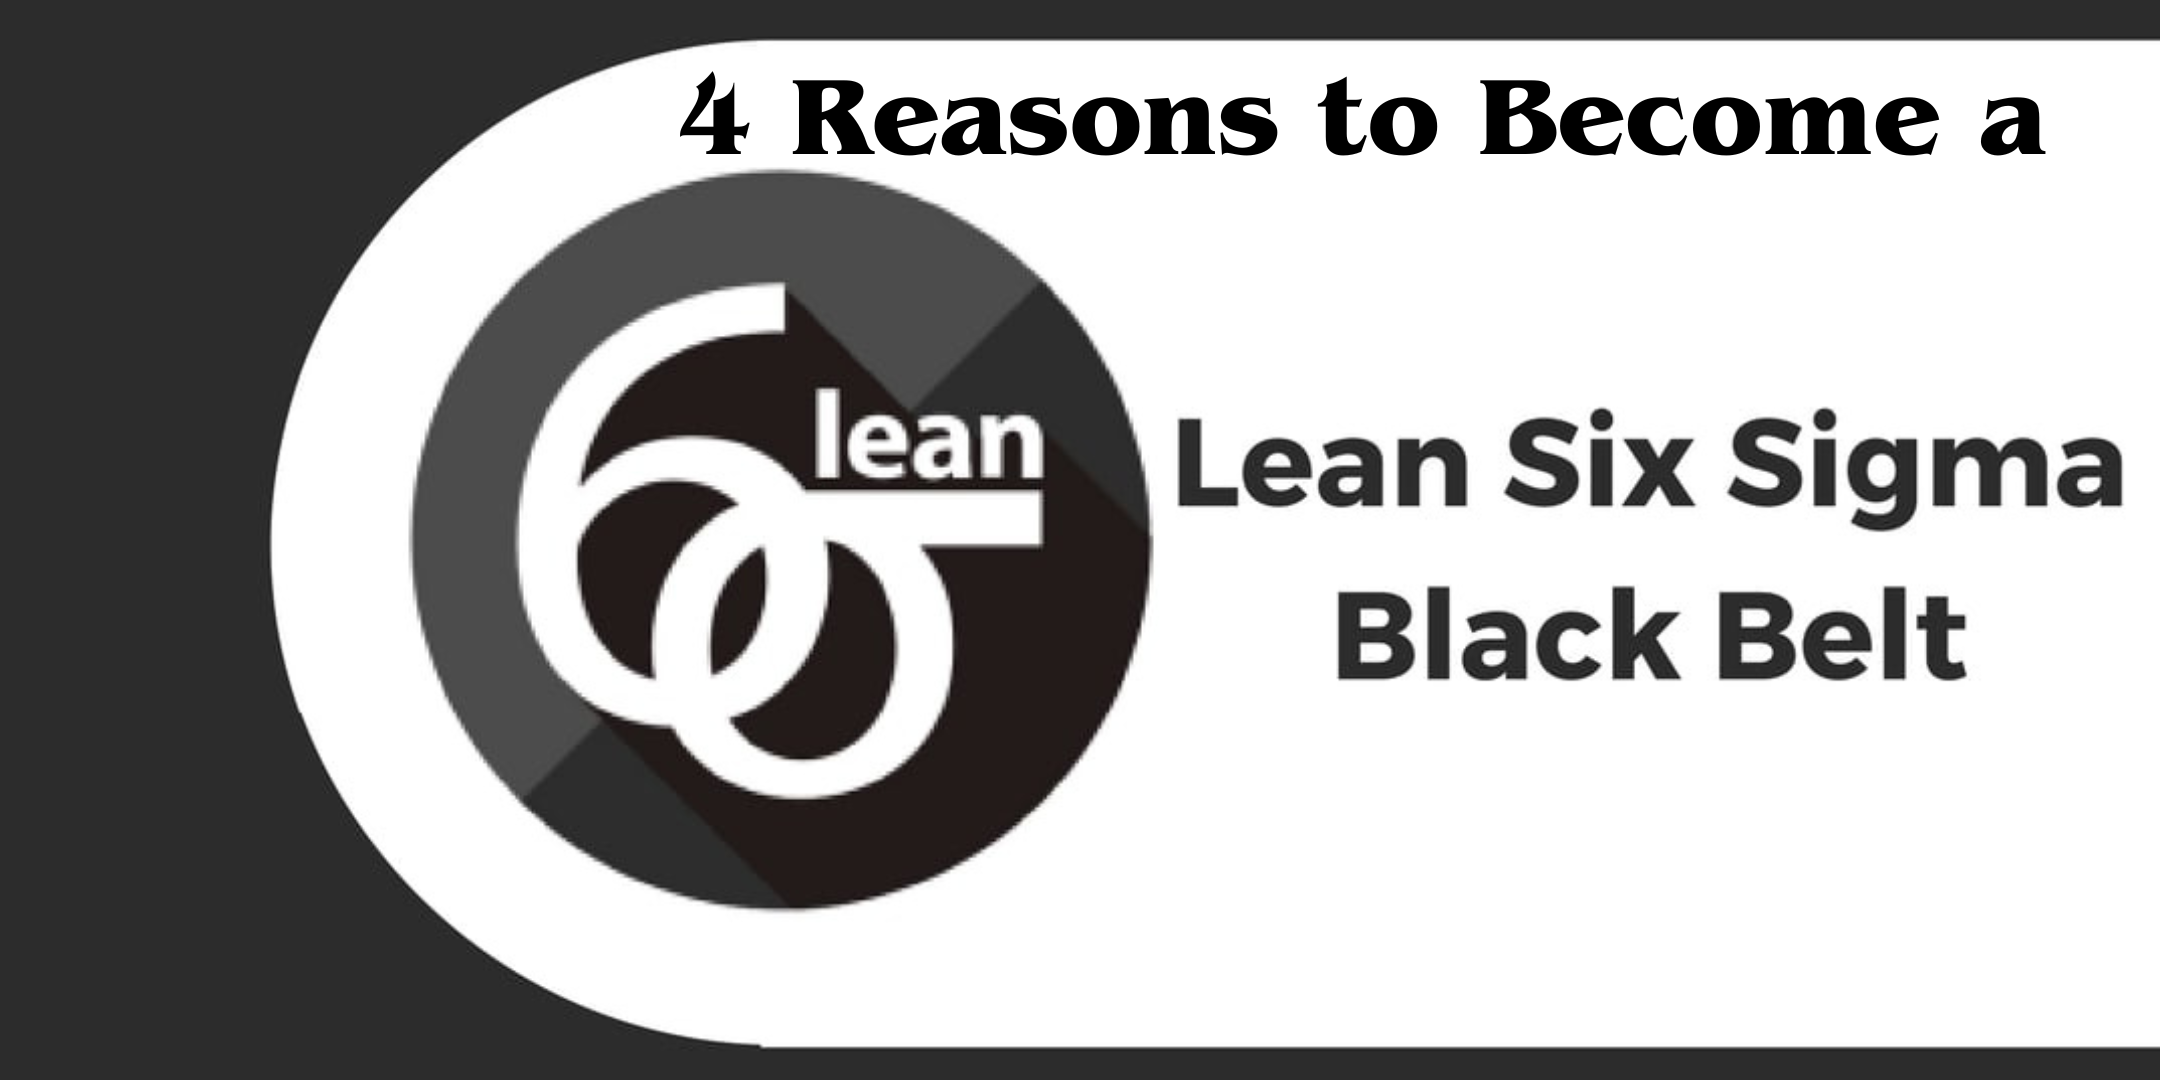 Lean Six Sigma Black Belt training guide